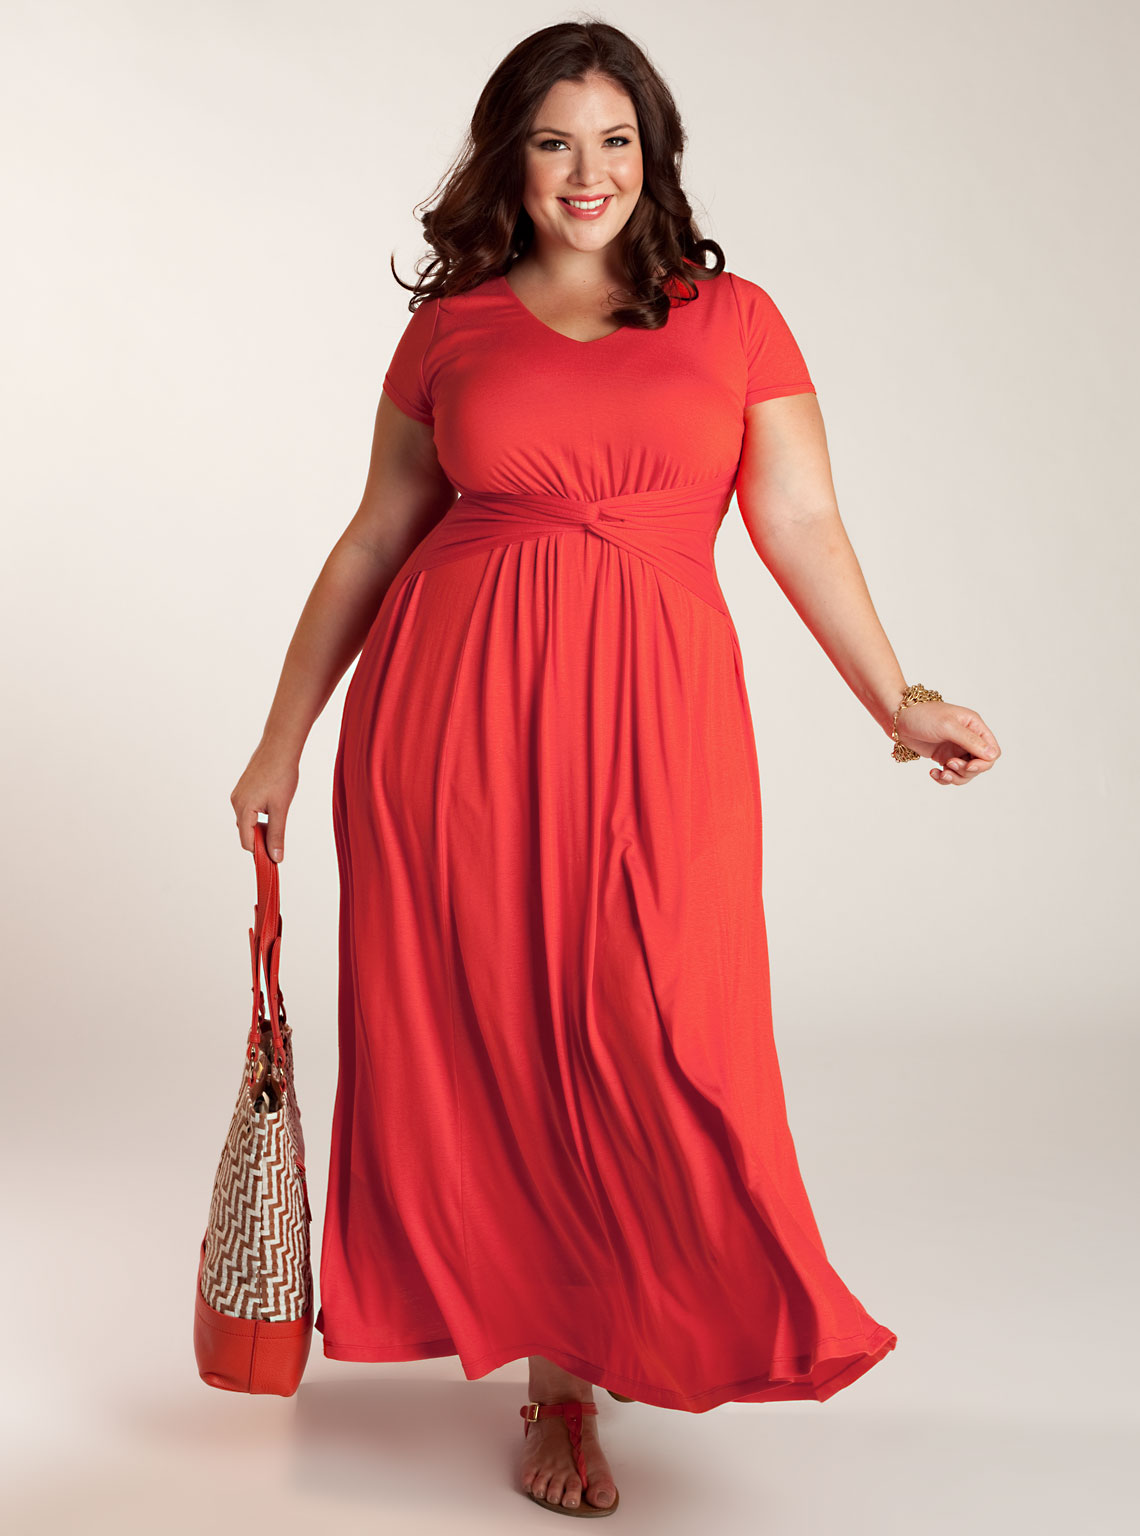 Plus Size Summer Dresses | DressedUpGirl.com